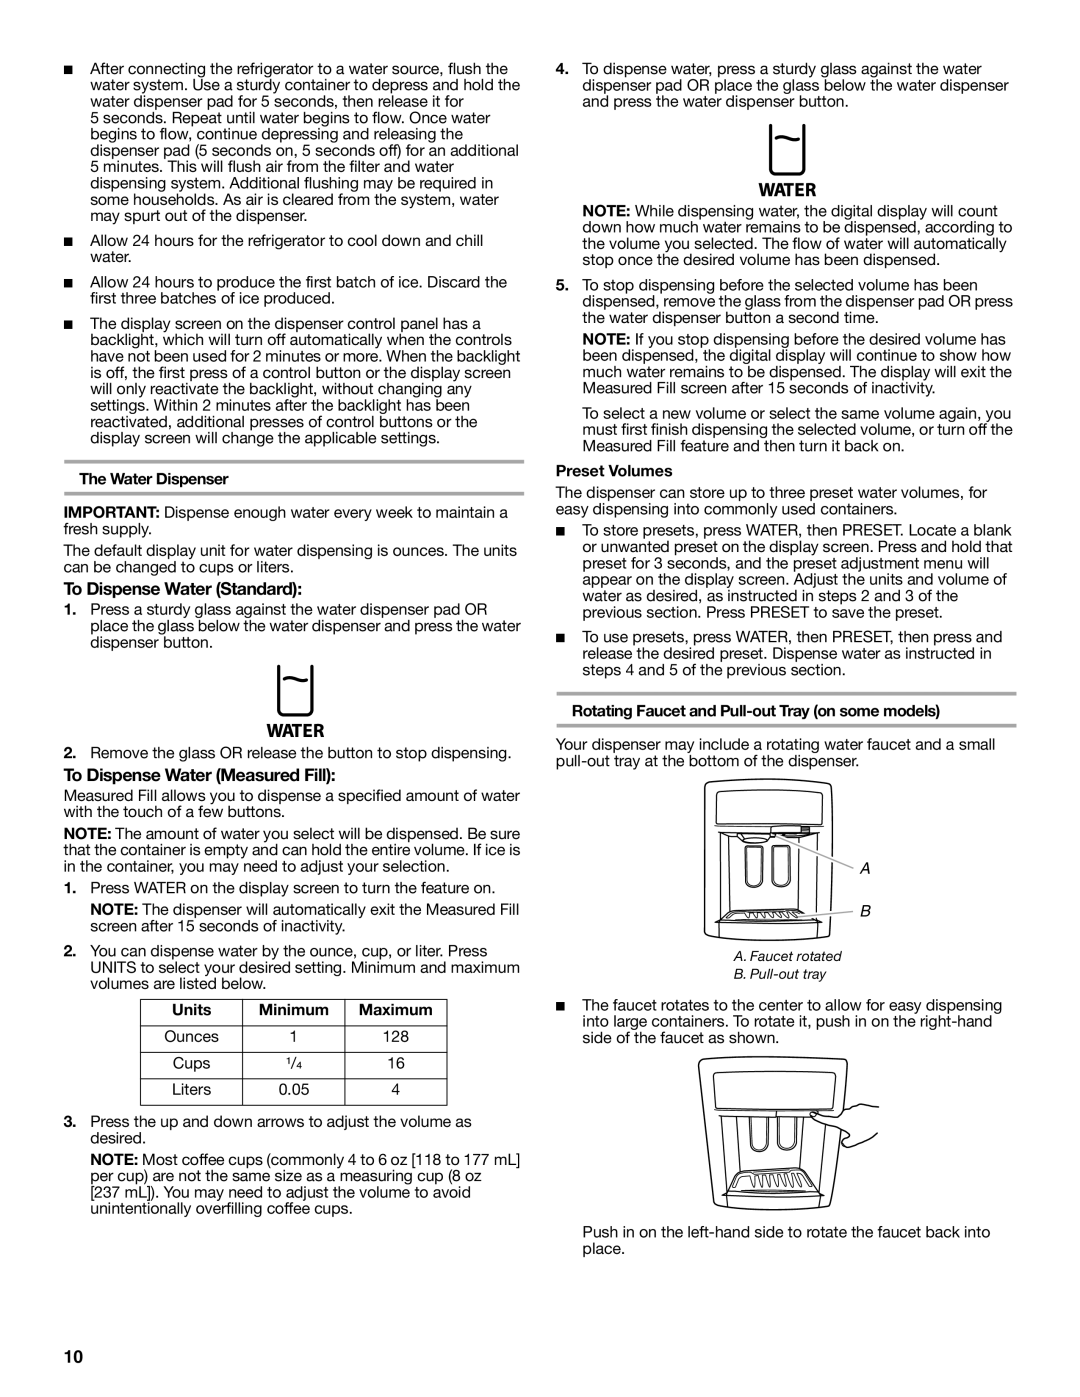 Whirlpool W10226405A, W10245525A installation instructions The Water Dispenser, Units, Minimum, Maximum, Preset Volumes 